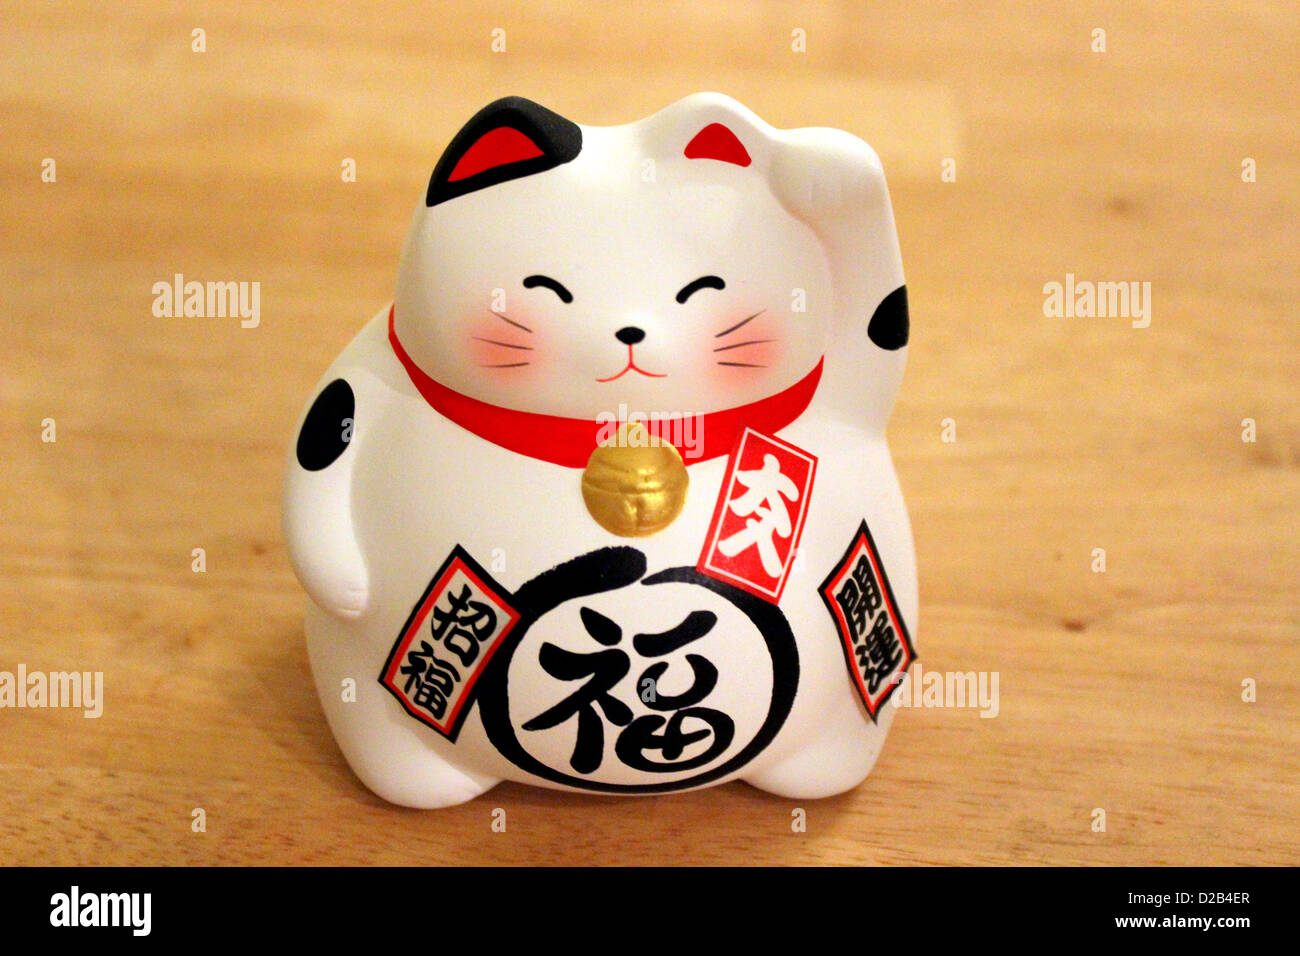 Maneki-neko, the Japanese fortune cat